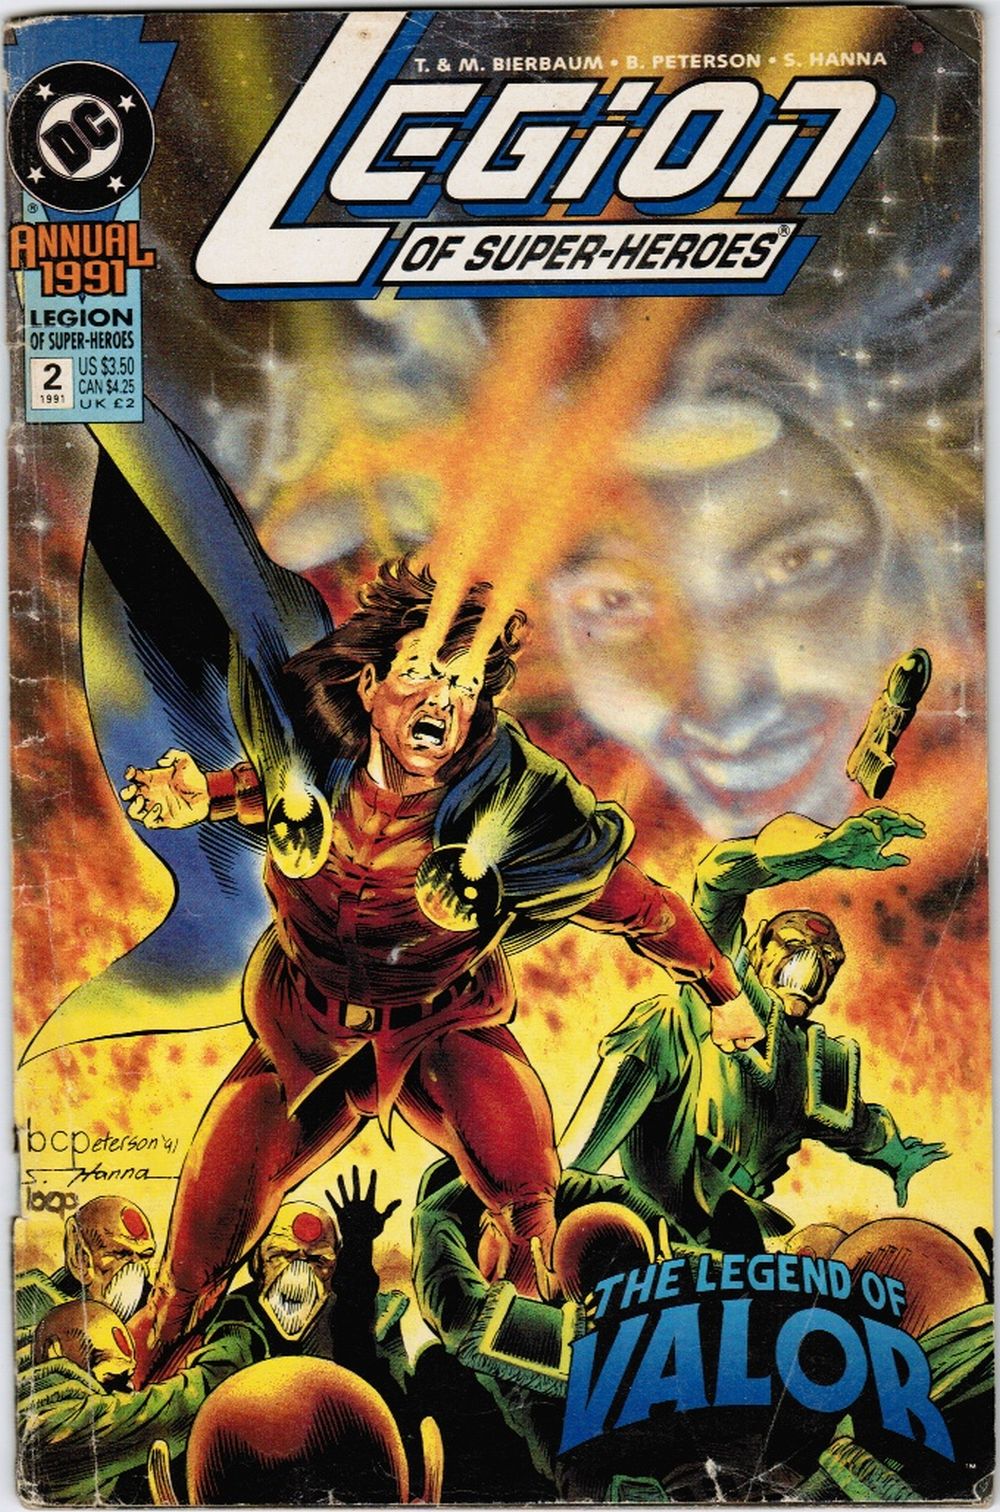 BIERBAUM, T. & M. ; B. PETERSON; S. HANNA - Legion of Super-Heroes Annual Issue 2